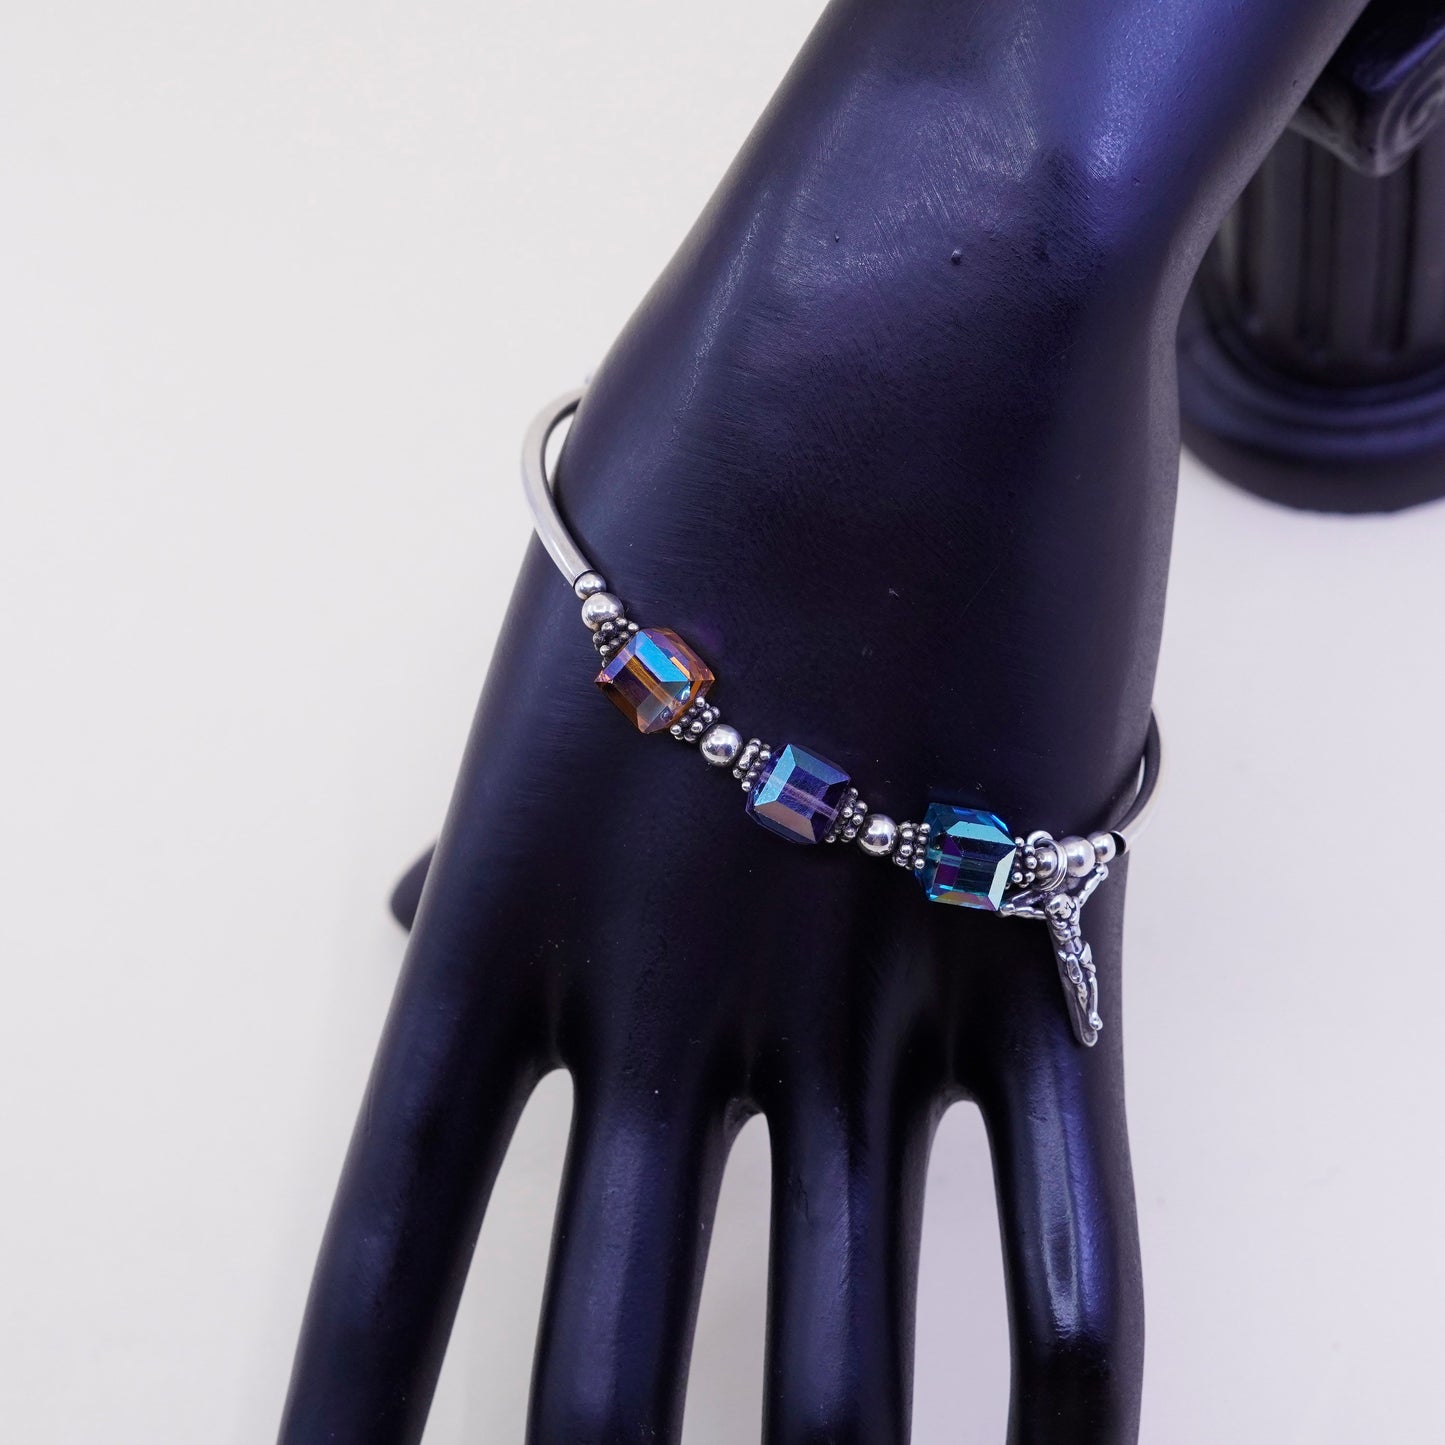 7”, Sterling 925 silver handmade bracelet Swarovski crystal beads N cross charm